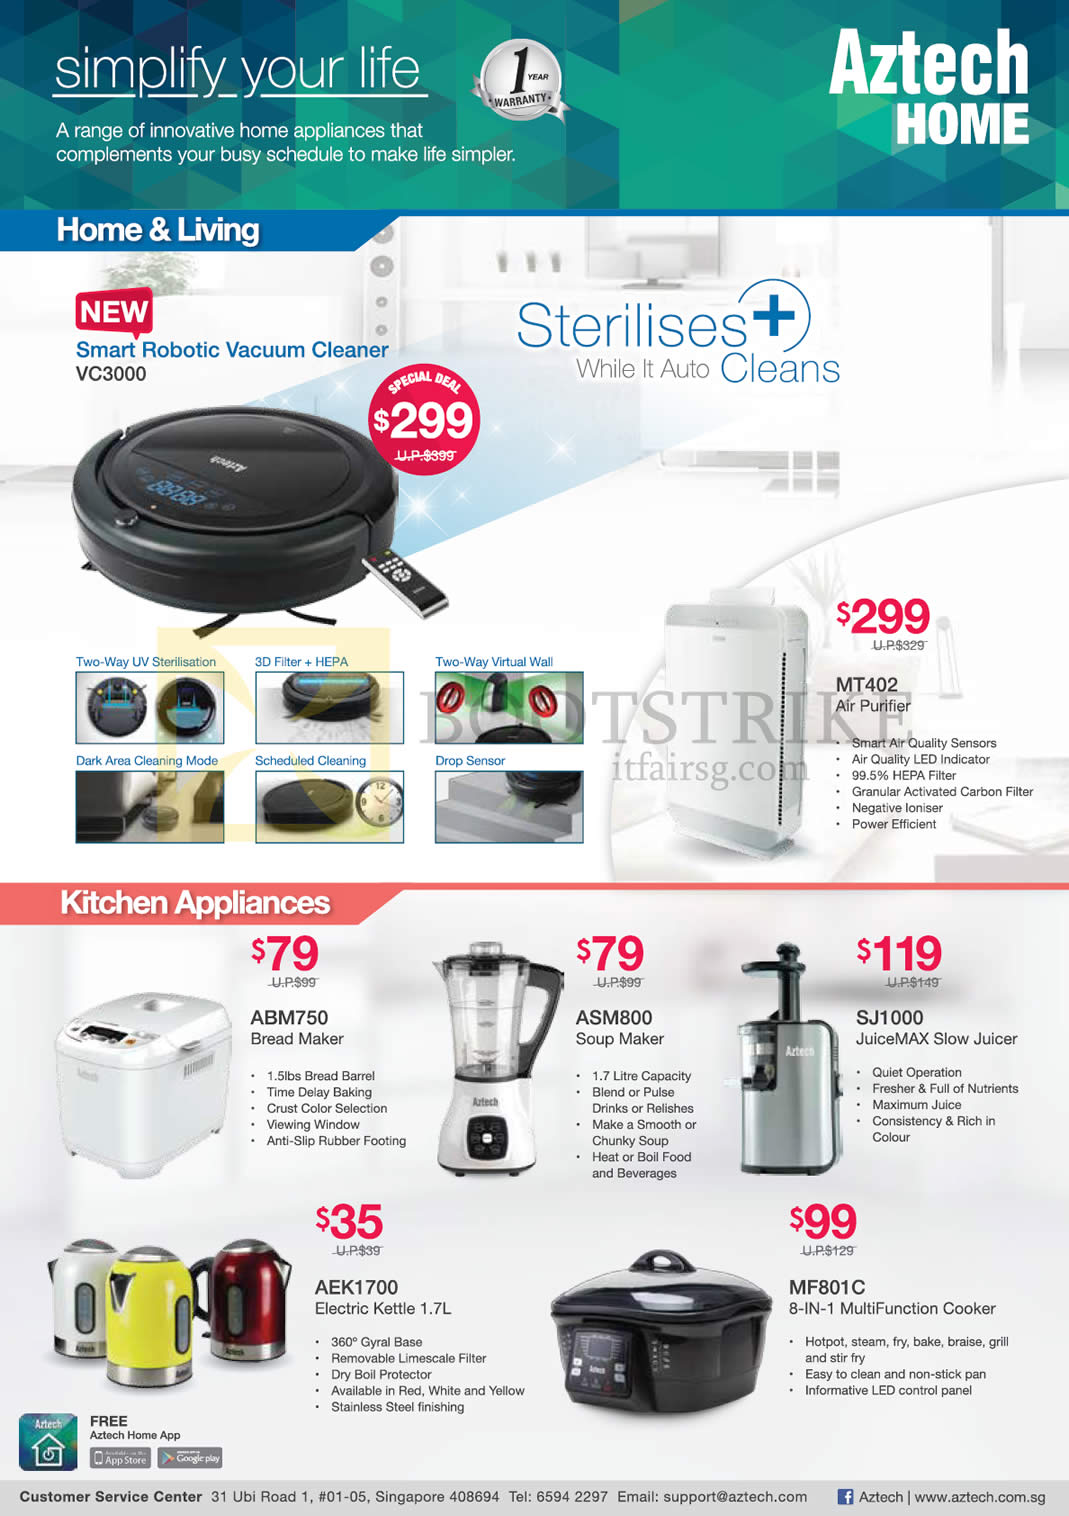 COMEX 2015 price list image brochure of Aztech Vacuum Cleaner VC3000, MT402 Air Purifier, ABM750 Bread Maker, ASM800 Soup Maker, SJ1000 JuiceMAX Slow Juicer, MF801C 8-IN-1 Cooker, AEK1700 Electric Kettle